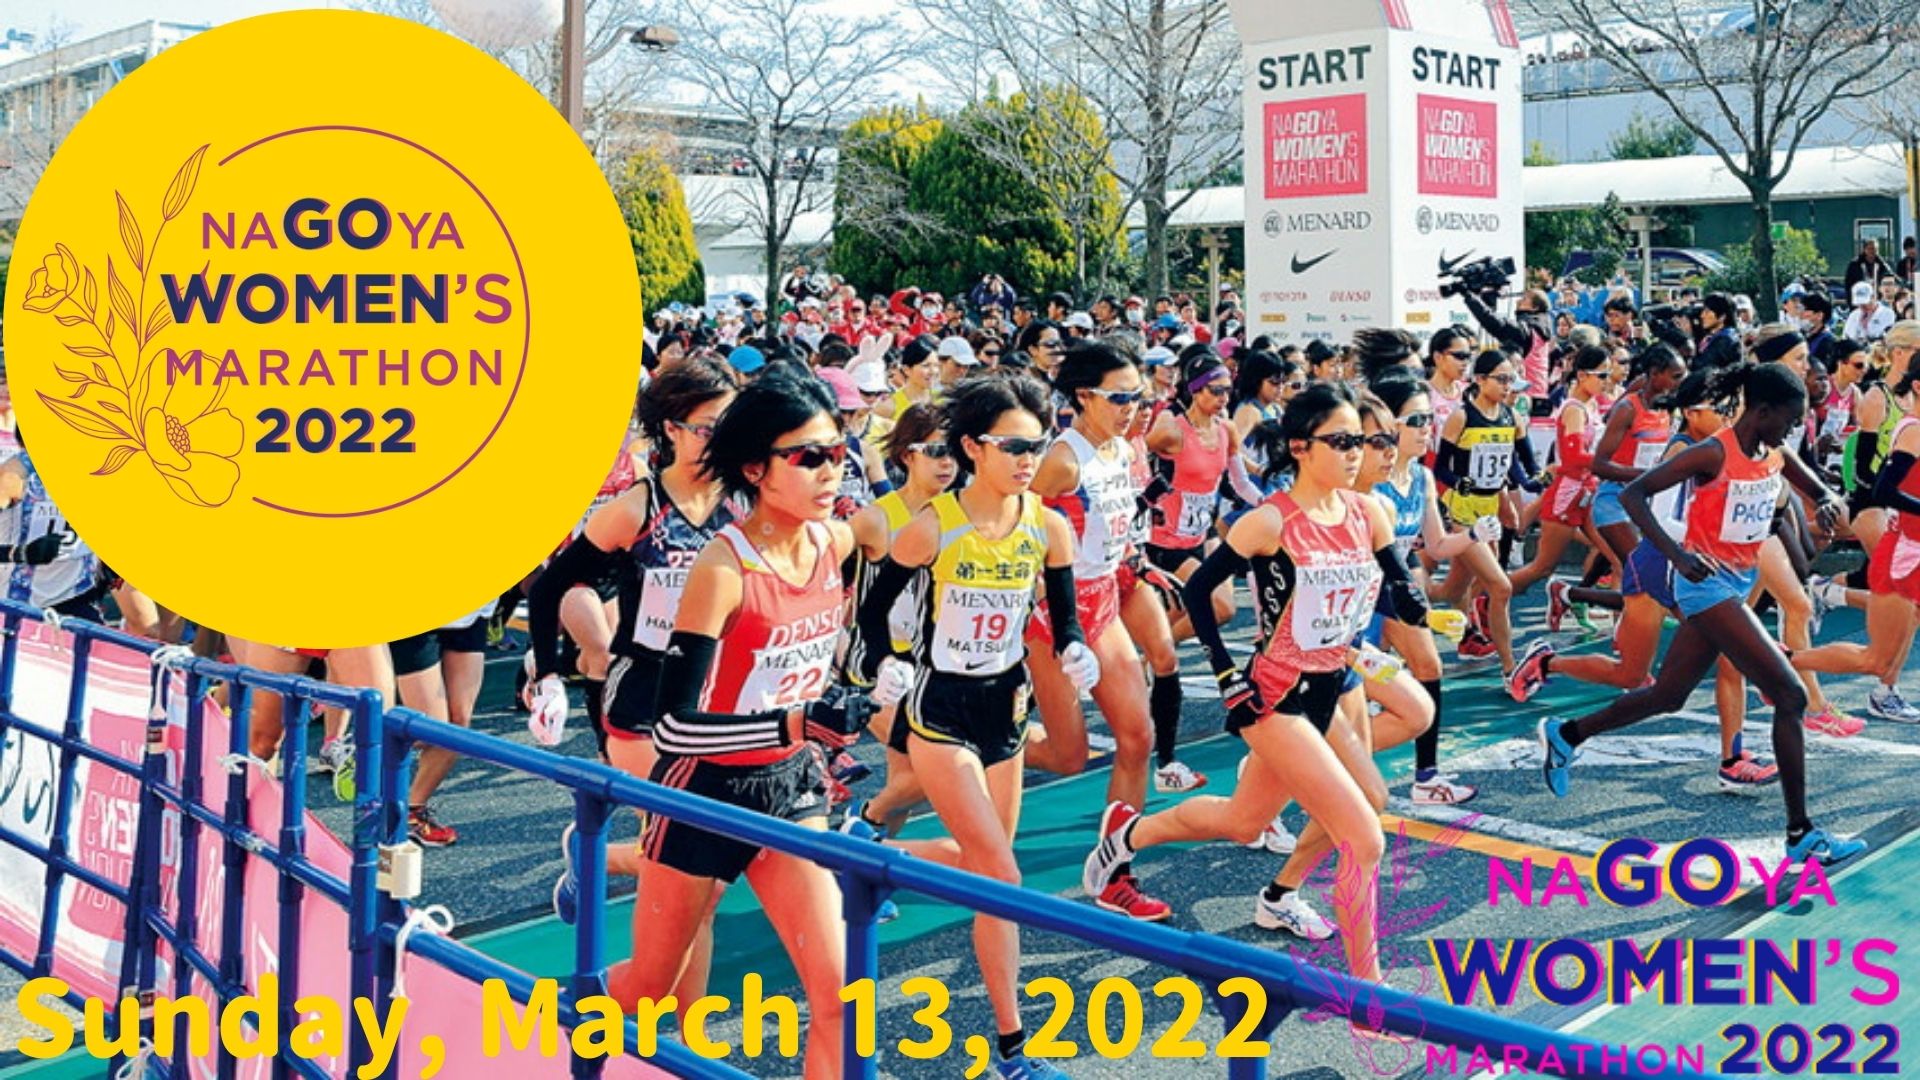 Nagoya Women's Marathon 2022 Race Date, Start Time, How to Watch